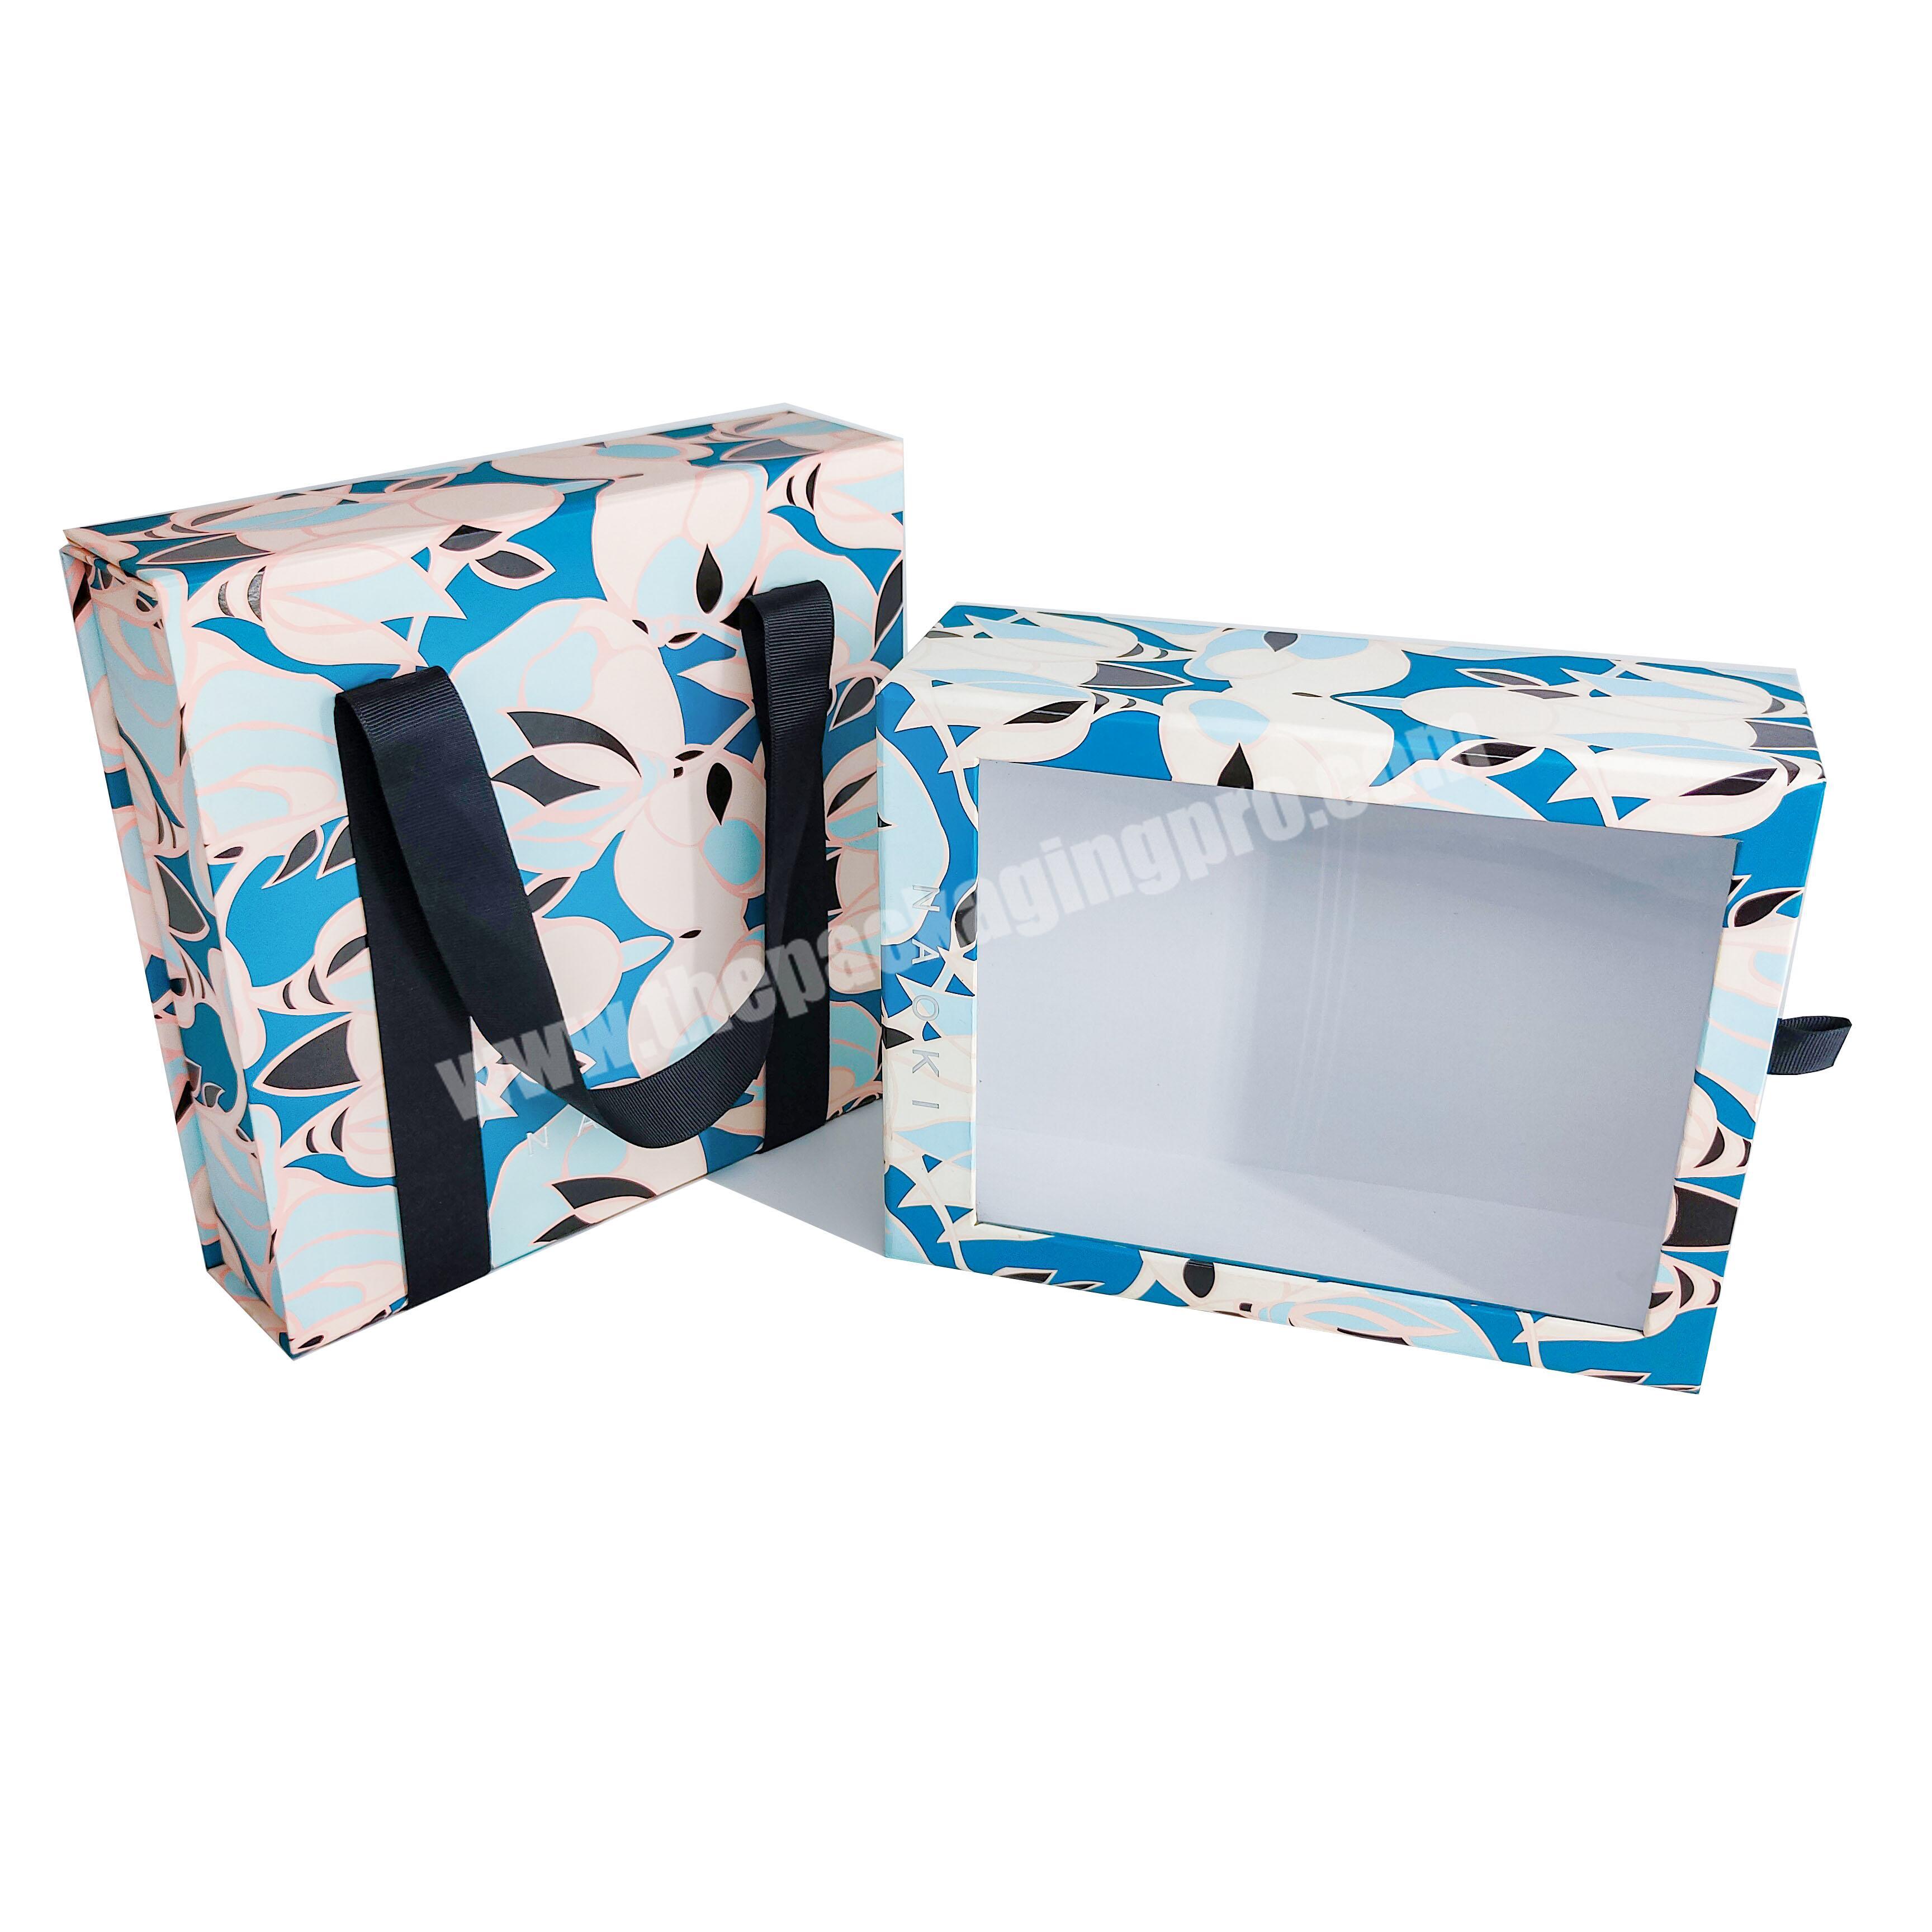 2020 new Christmas gift packaging boxbag wholesale